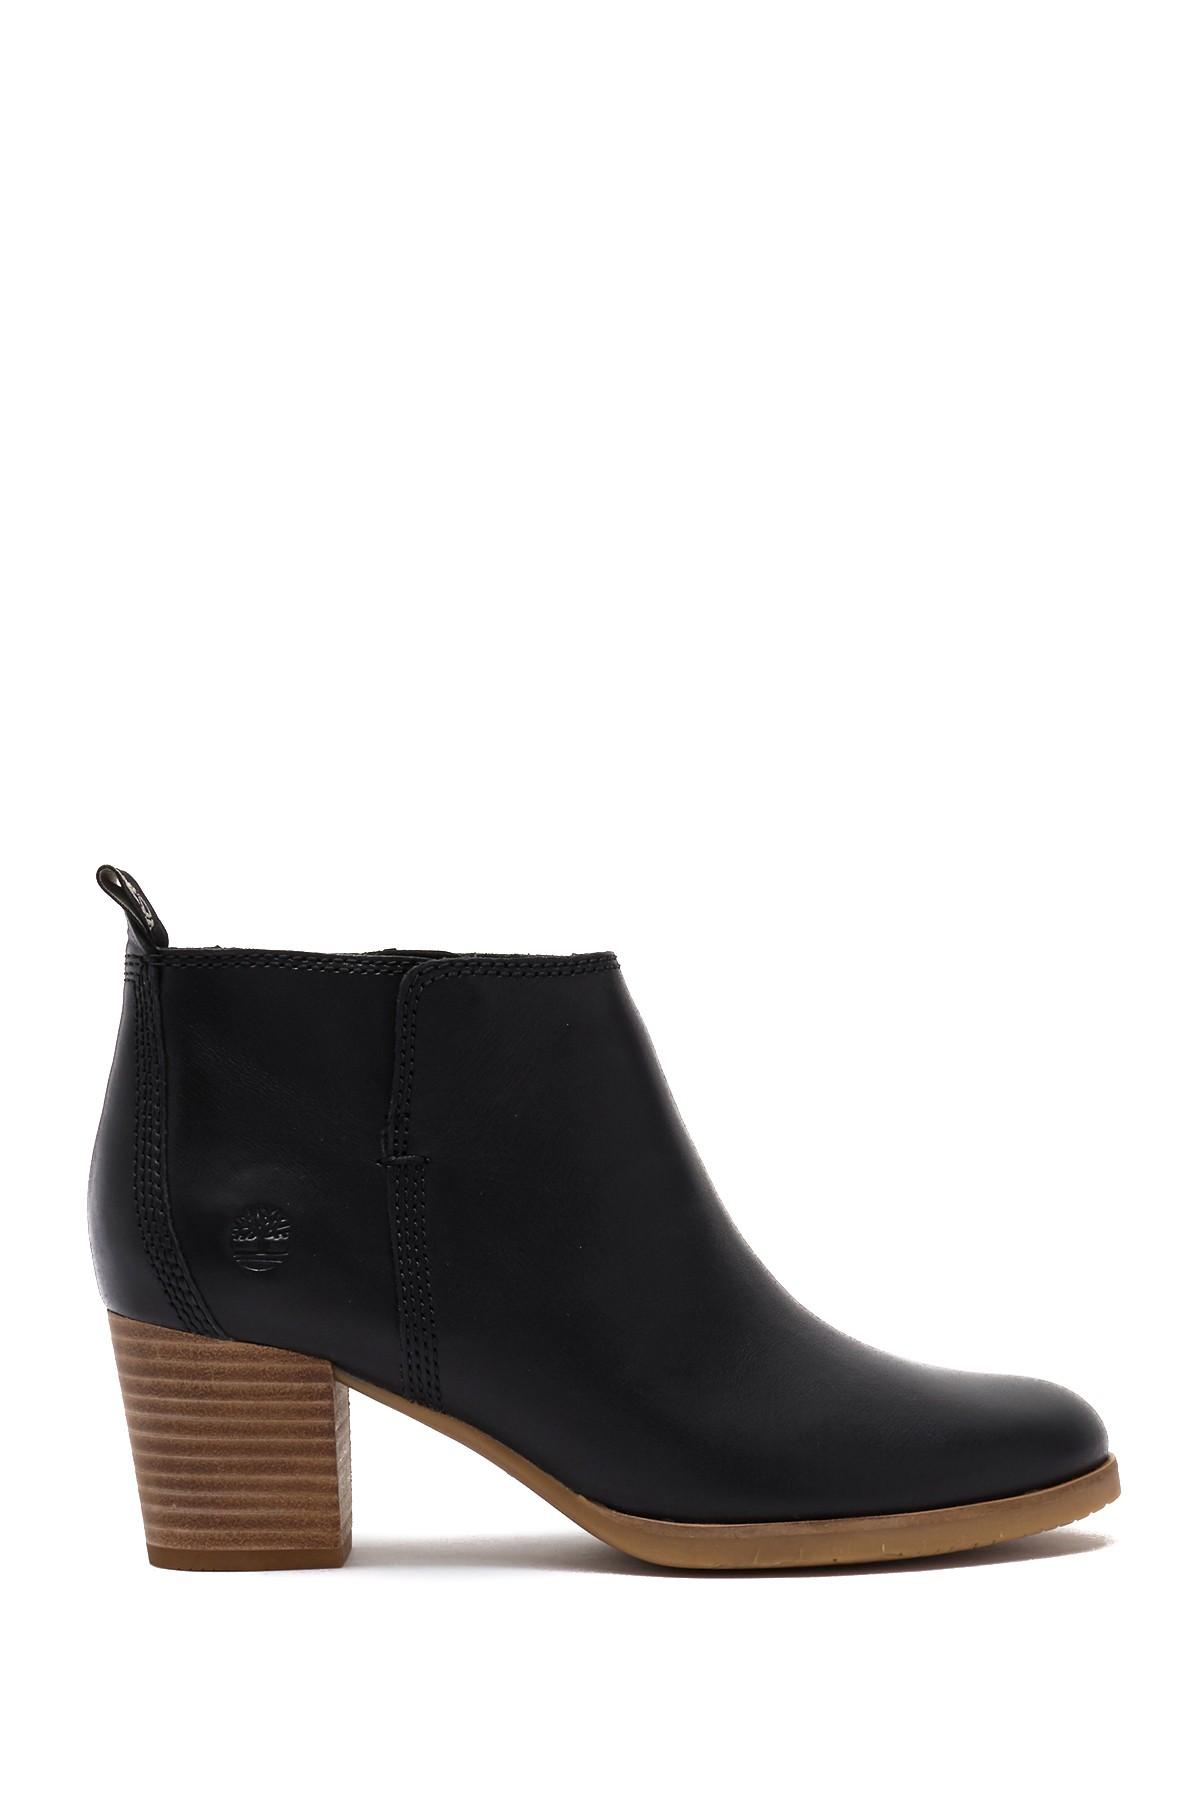 Eleonor Street Ankle Boot in Black 